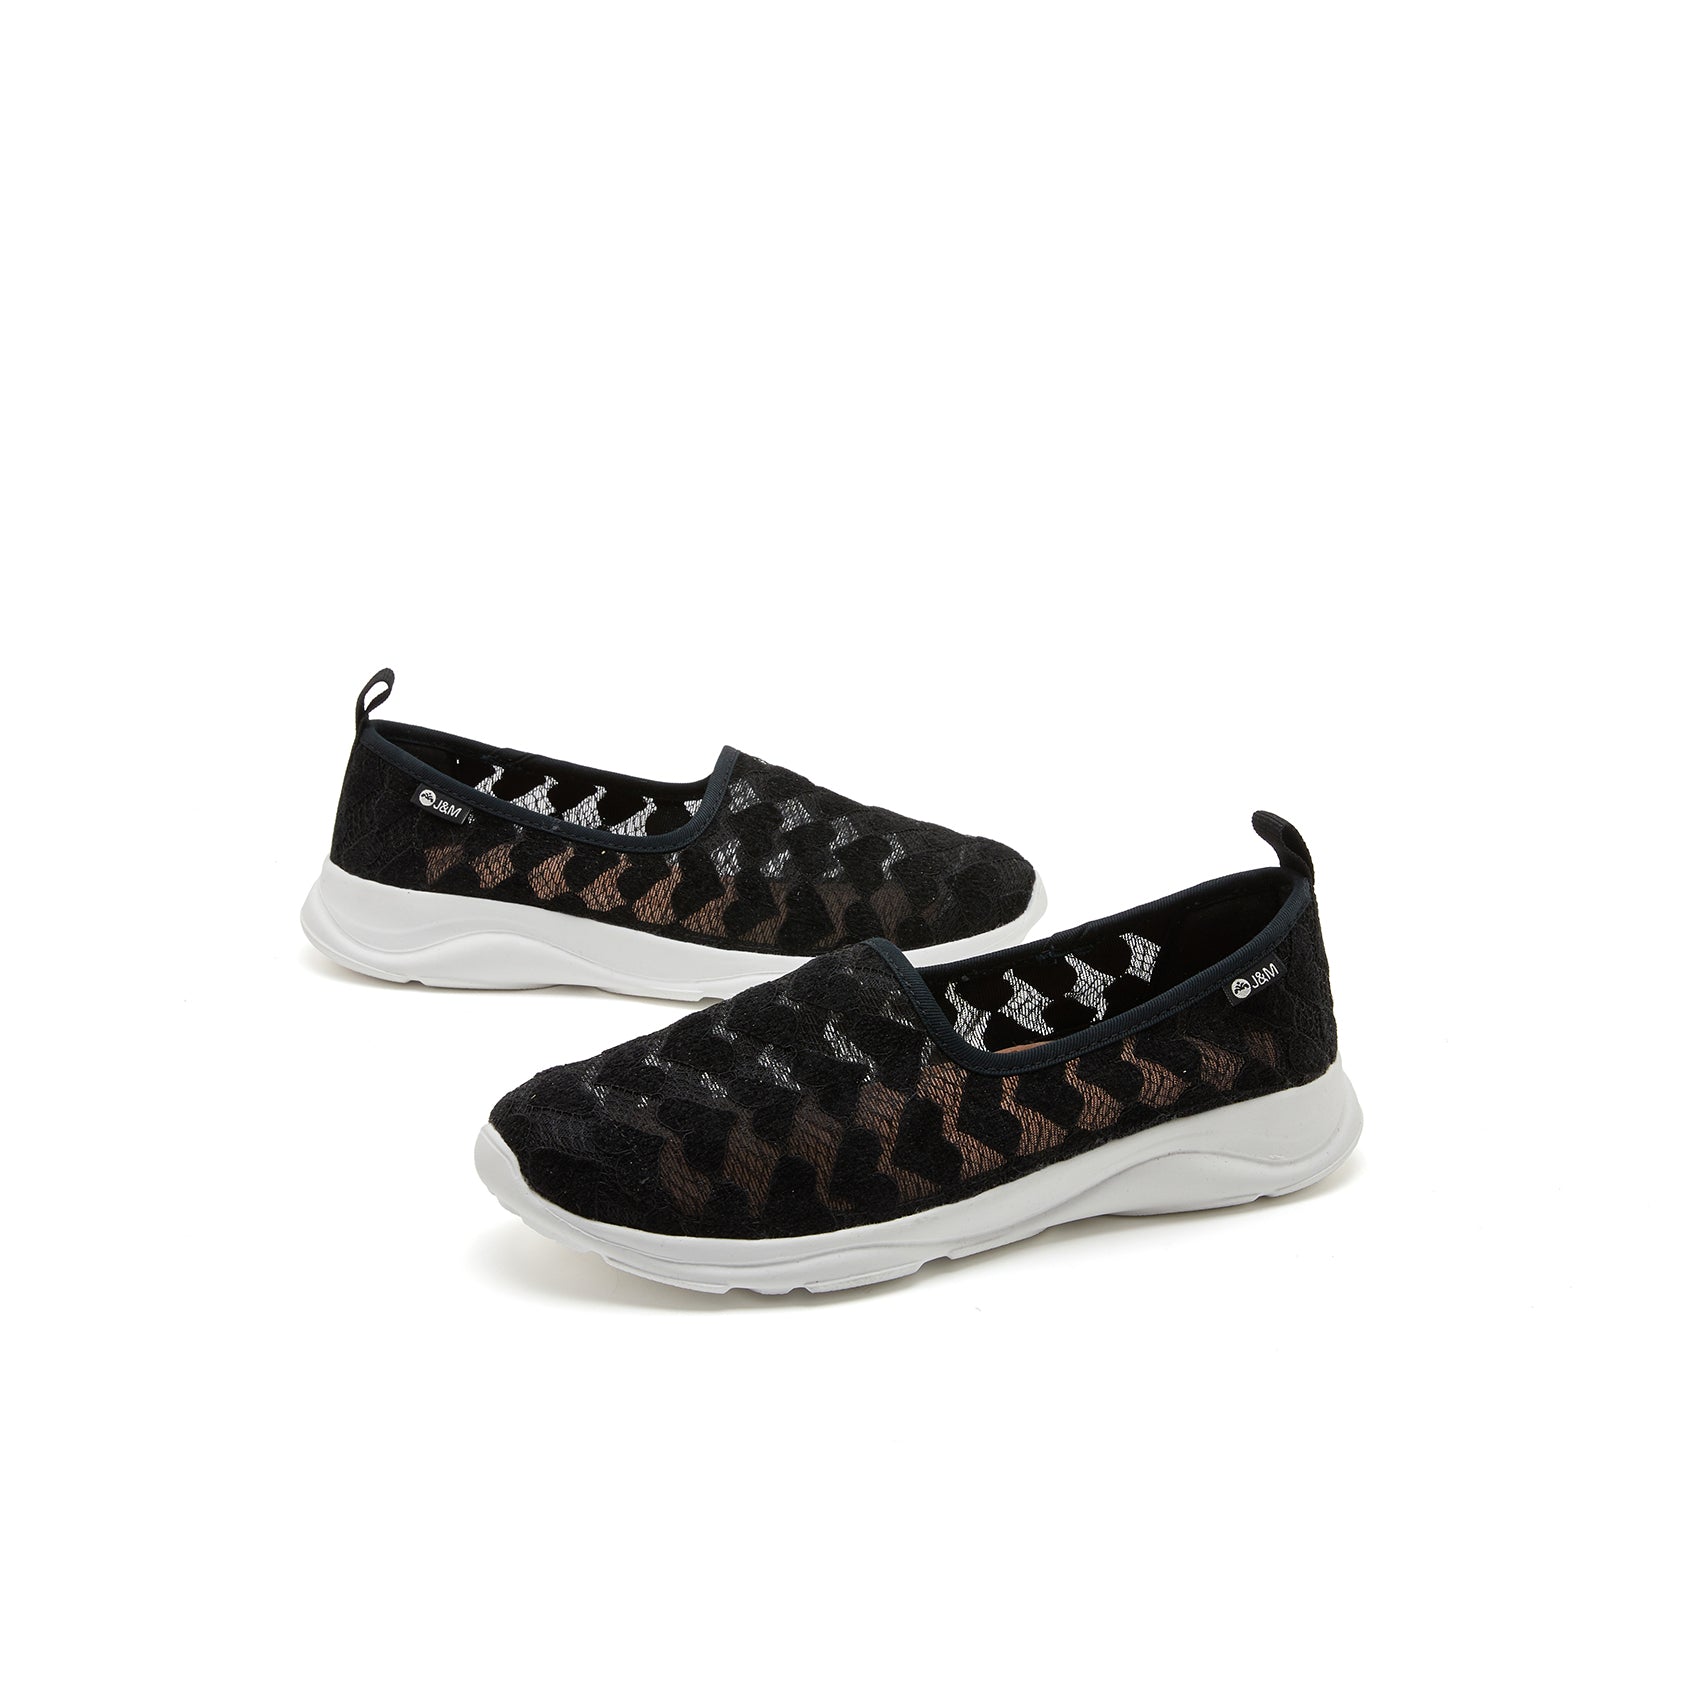 JOY&MARIO Women’s Slip-On Mesh Loafers Comfortable  Platform Shoes  78381W  Black